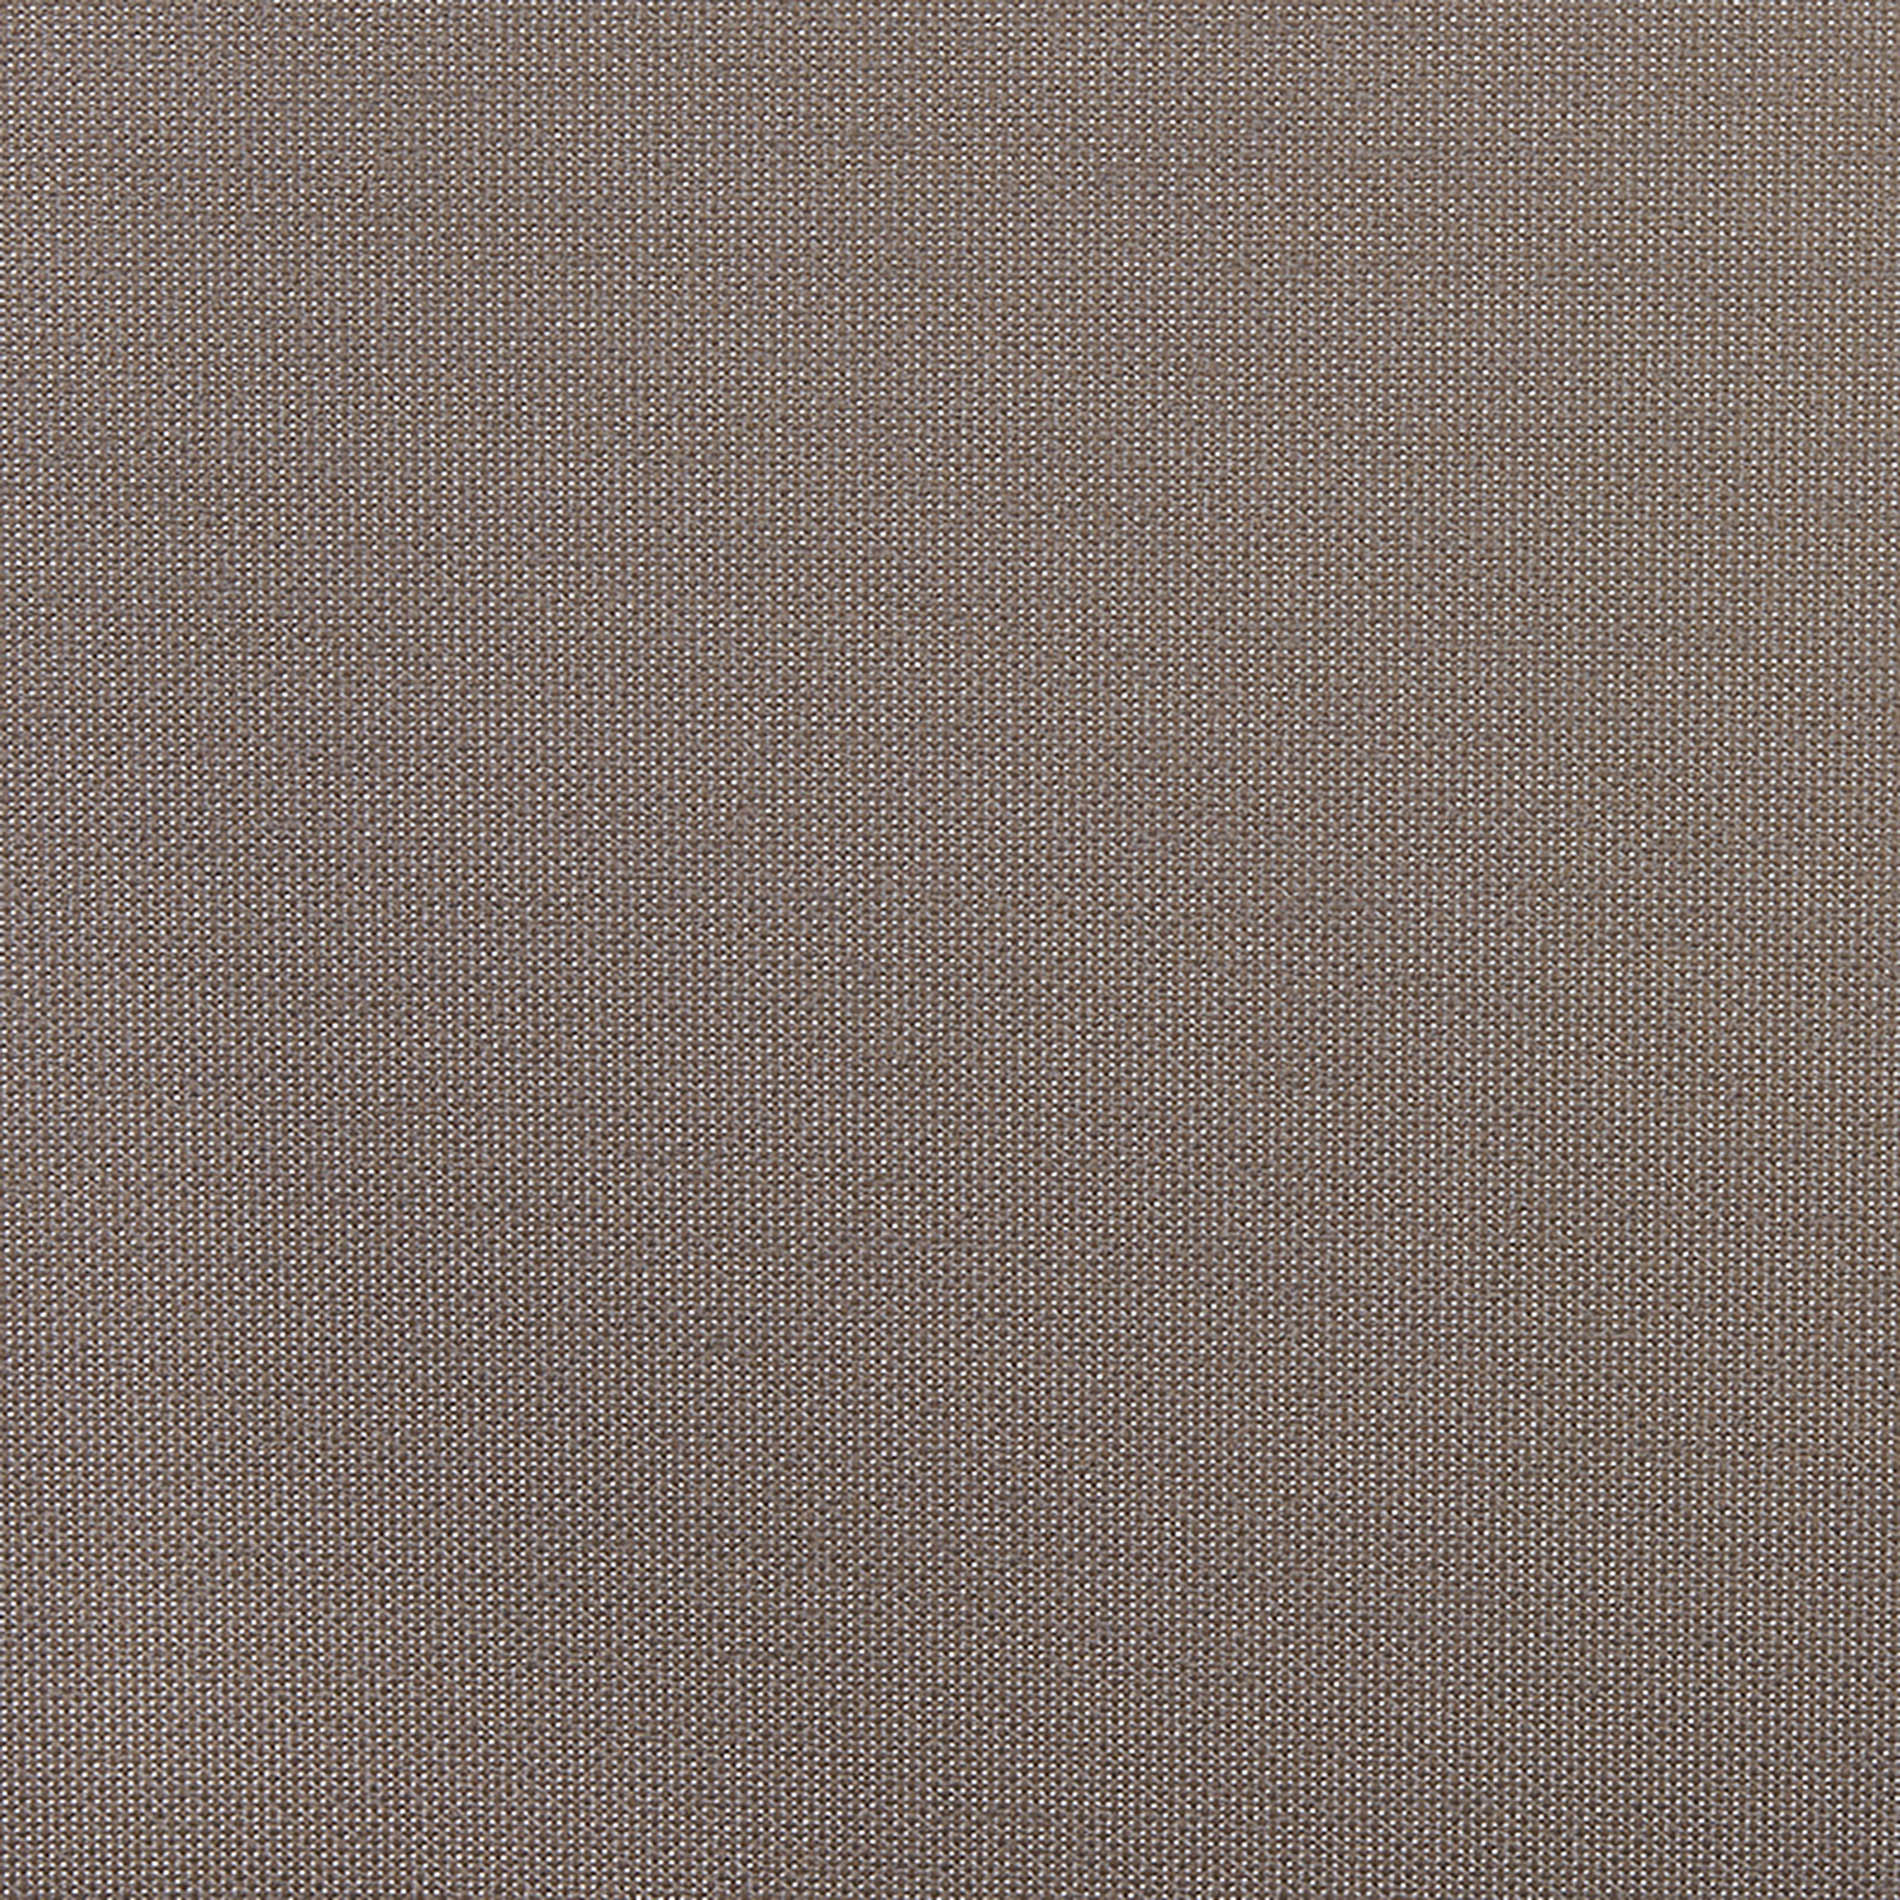 Altex - Fabric - ECOSCREEN 119600 - Light Grey/Metallized - 119606